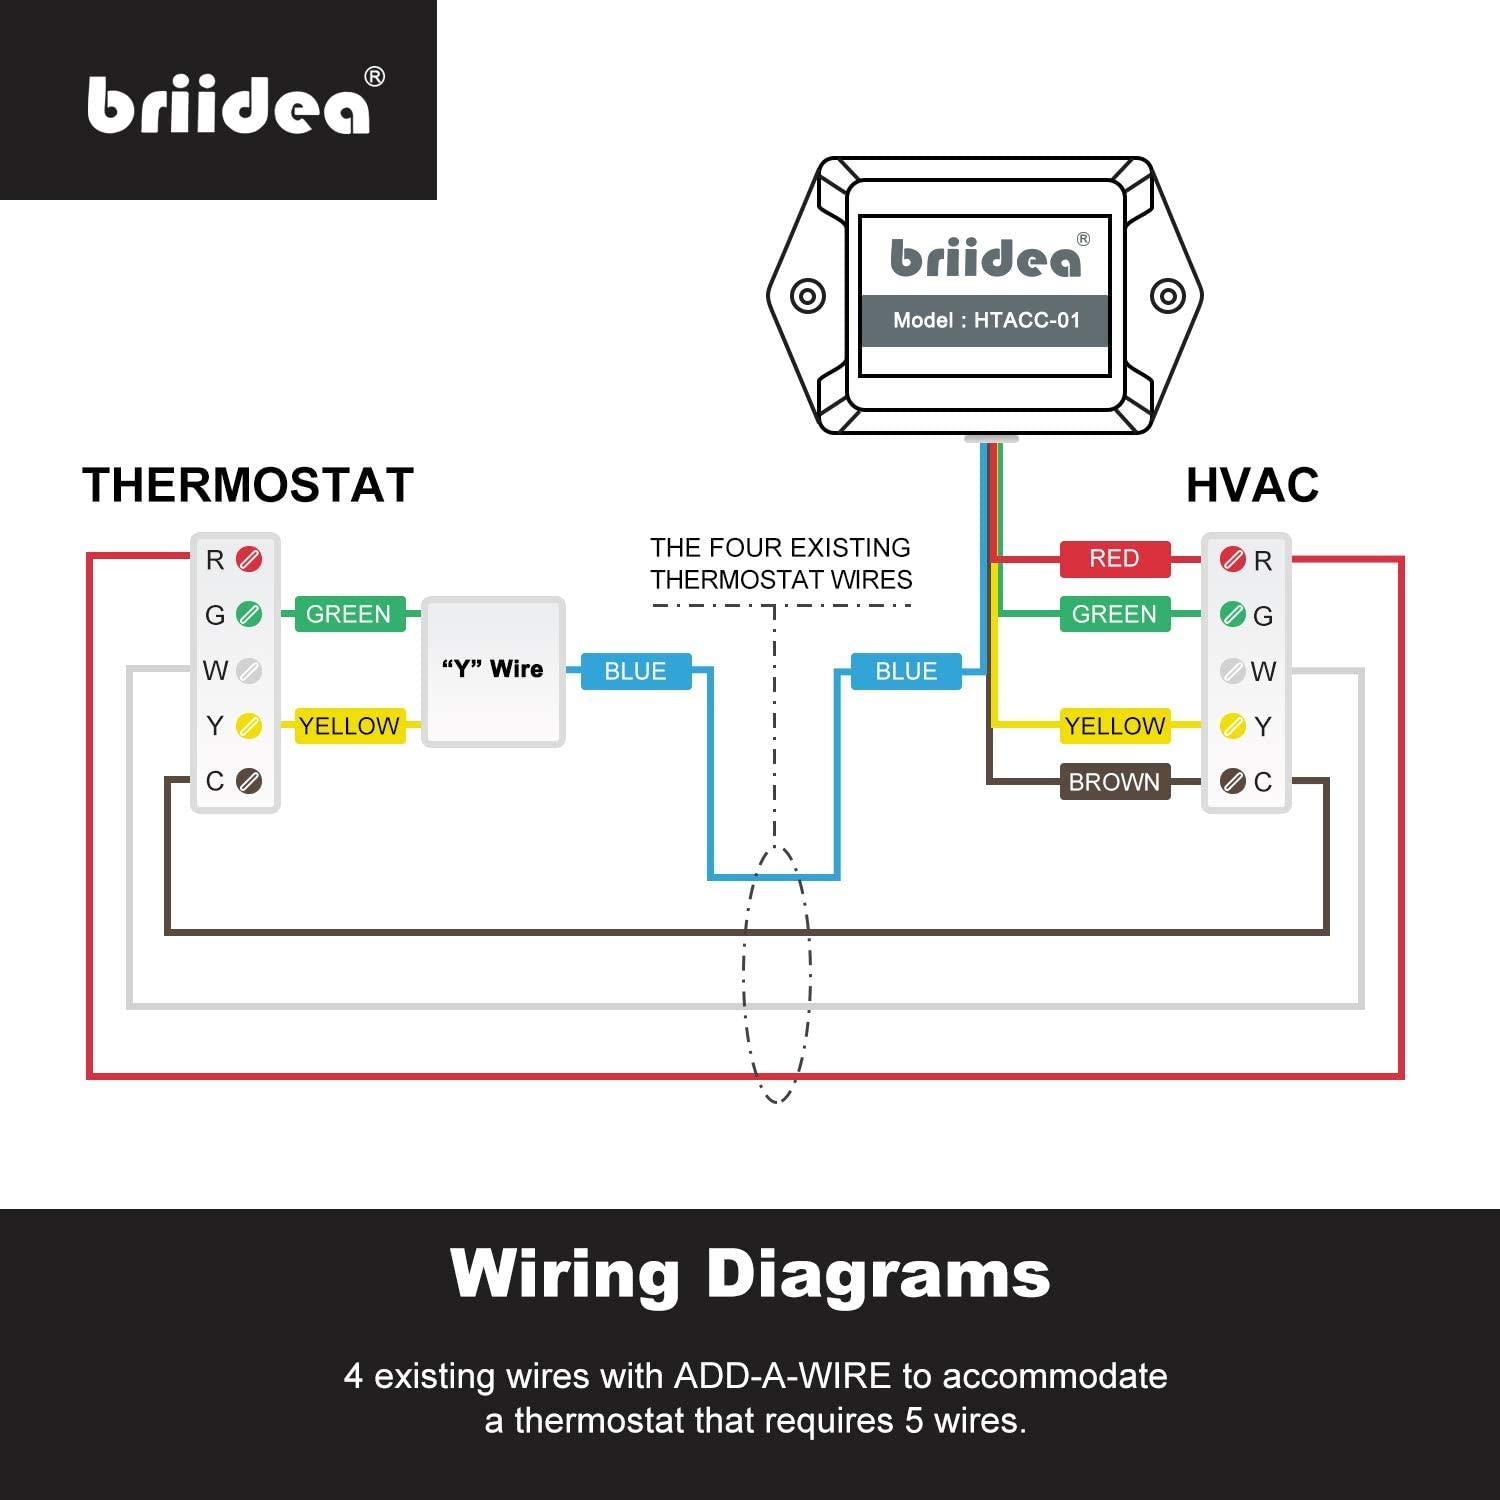 Add-A-Wire Accessory, Briidea Common Wire Kit for All 24VAC Thermostats (4 to 5 Wires), White